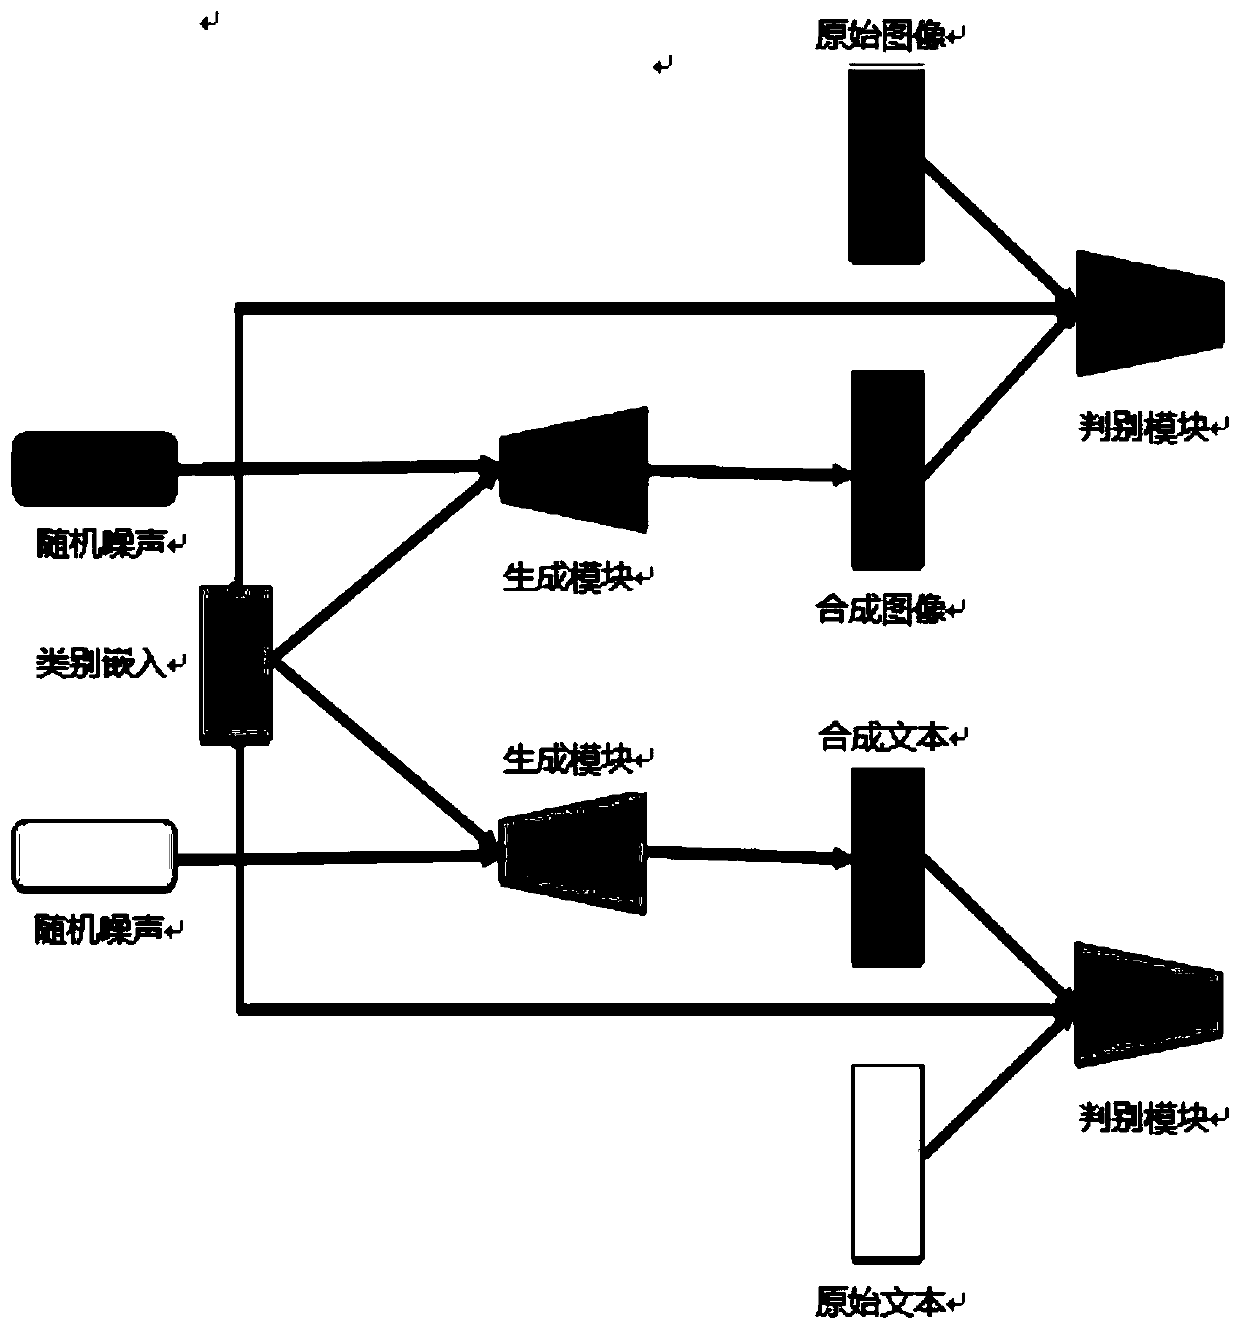 Zero-sample cross-modal retrieval method based on multi-modal feature synthesis